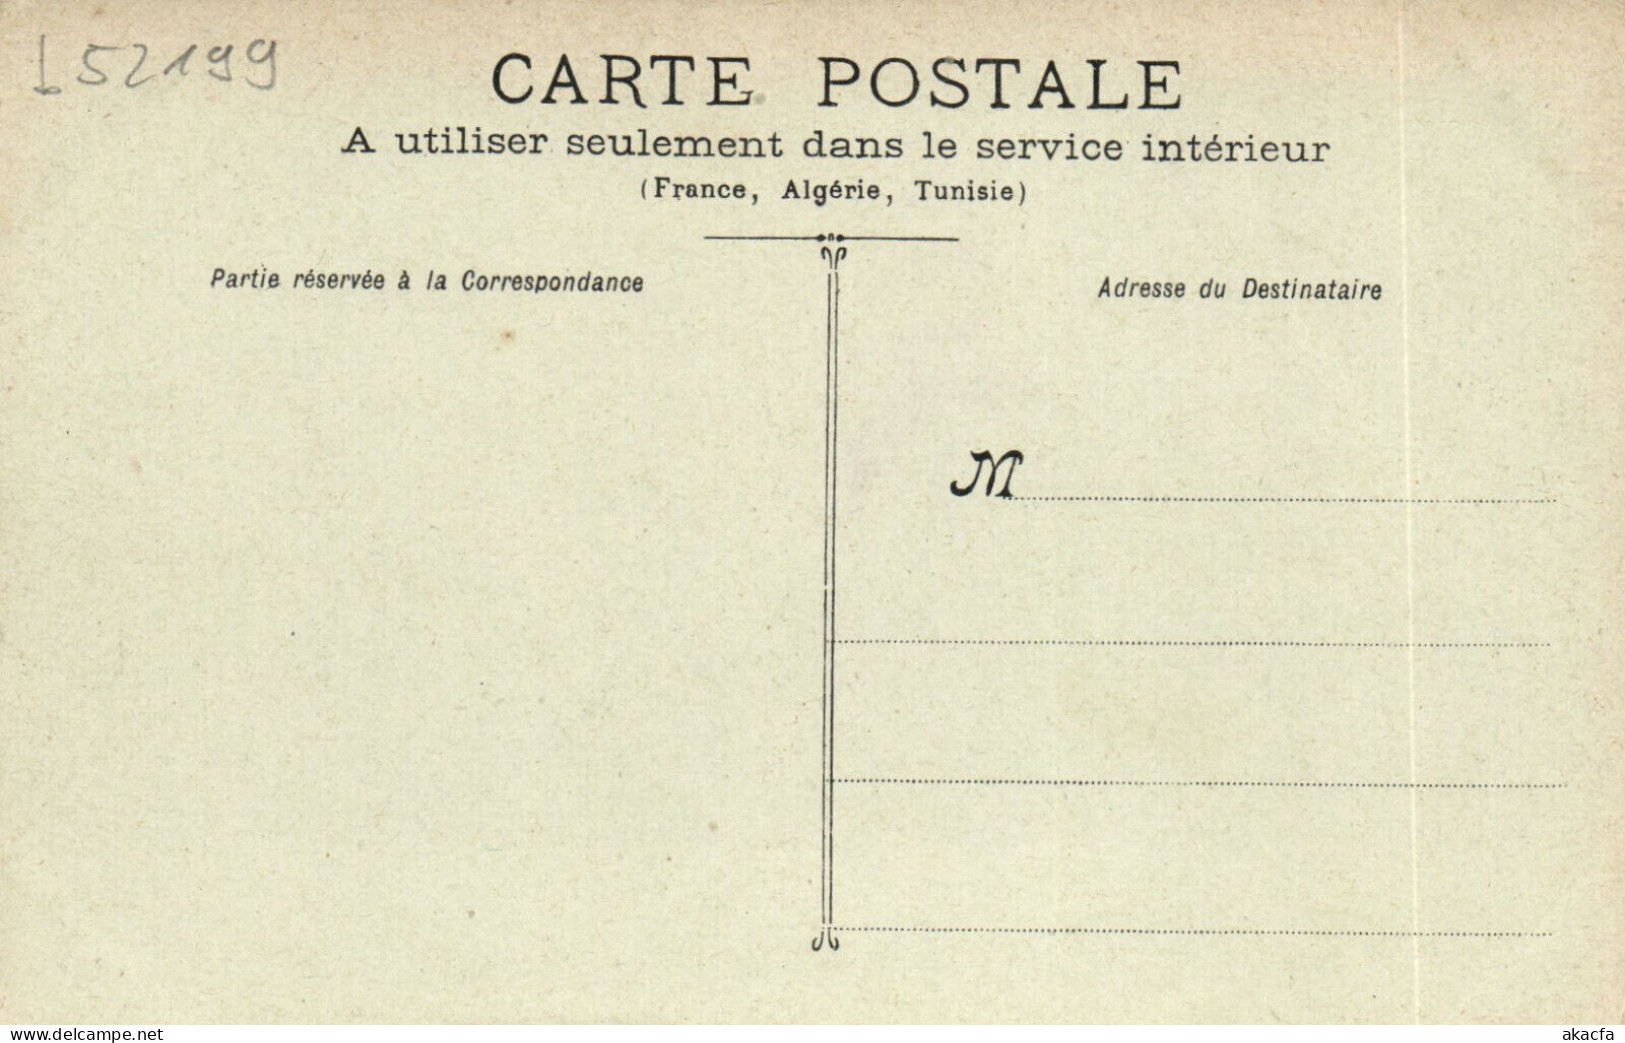 PC ARTIST SIGNED, CH. BEAUVAIS, SPORTS, HYDROTHÉRAPIE, Vintage Postcard (b52199) - Beauvais